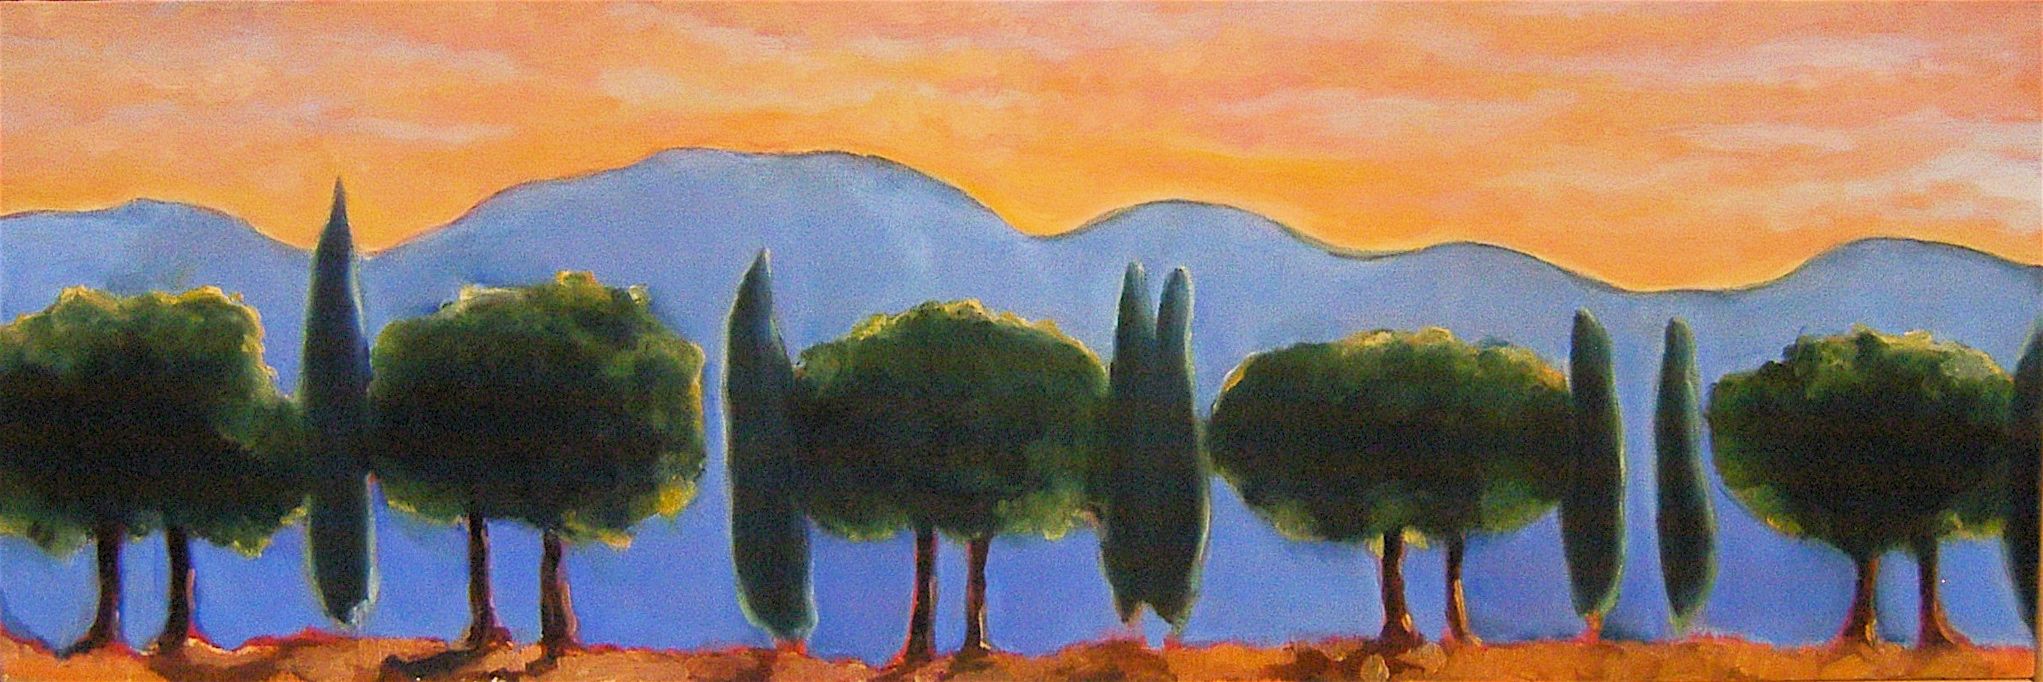 Tuscan Trees, Sunset